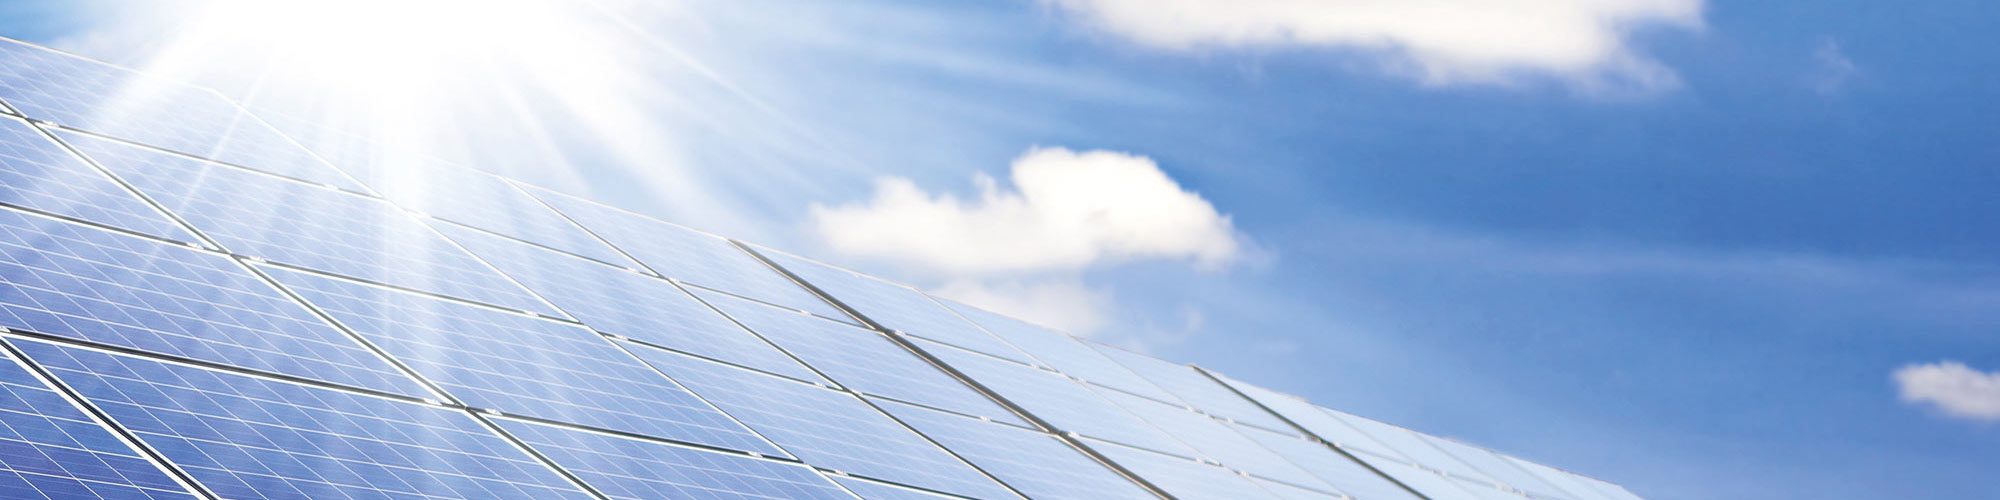 Aplicatii - Energie regenerabila - Siguranta operationala ridicata si randamente mai mari in domeniul energiei regenerabile - Sisteme fotovoltaice - Functionare in conditii de siguranta cu disponibilitate maxima